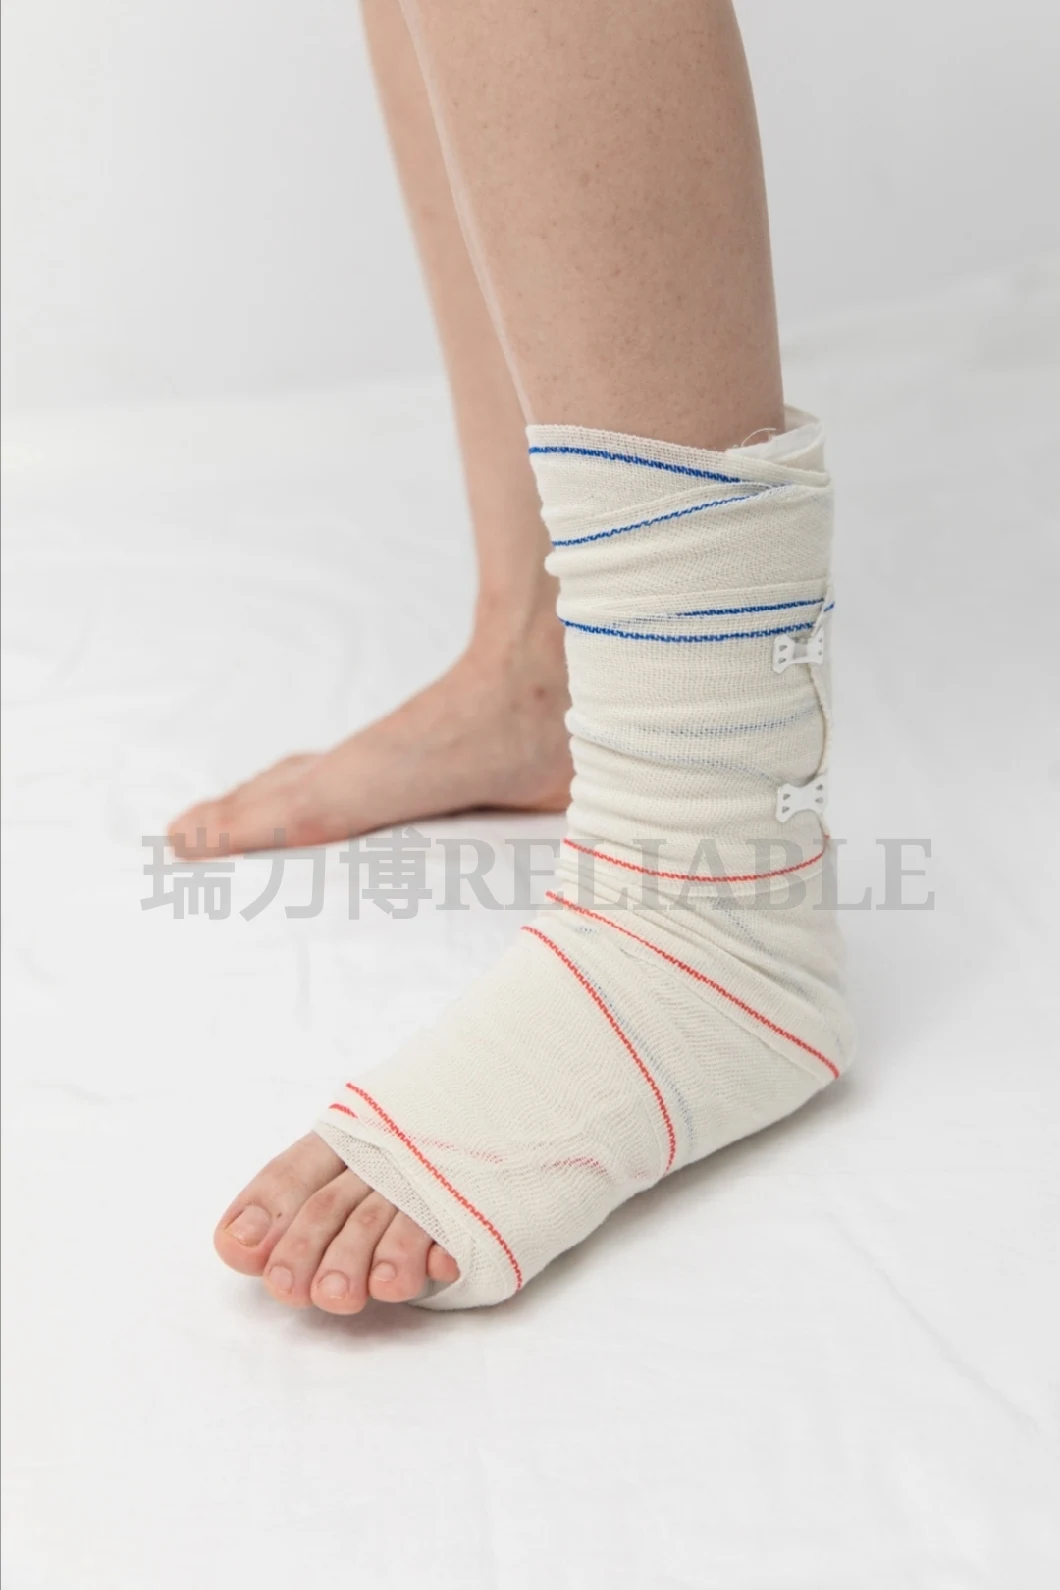 Leg Splint Medical Product Fiberglass Splint